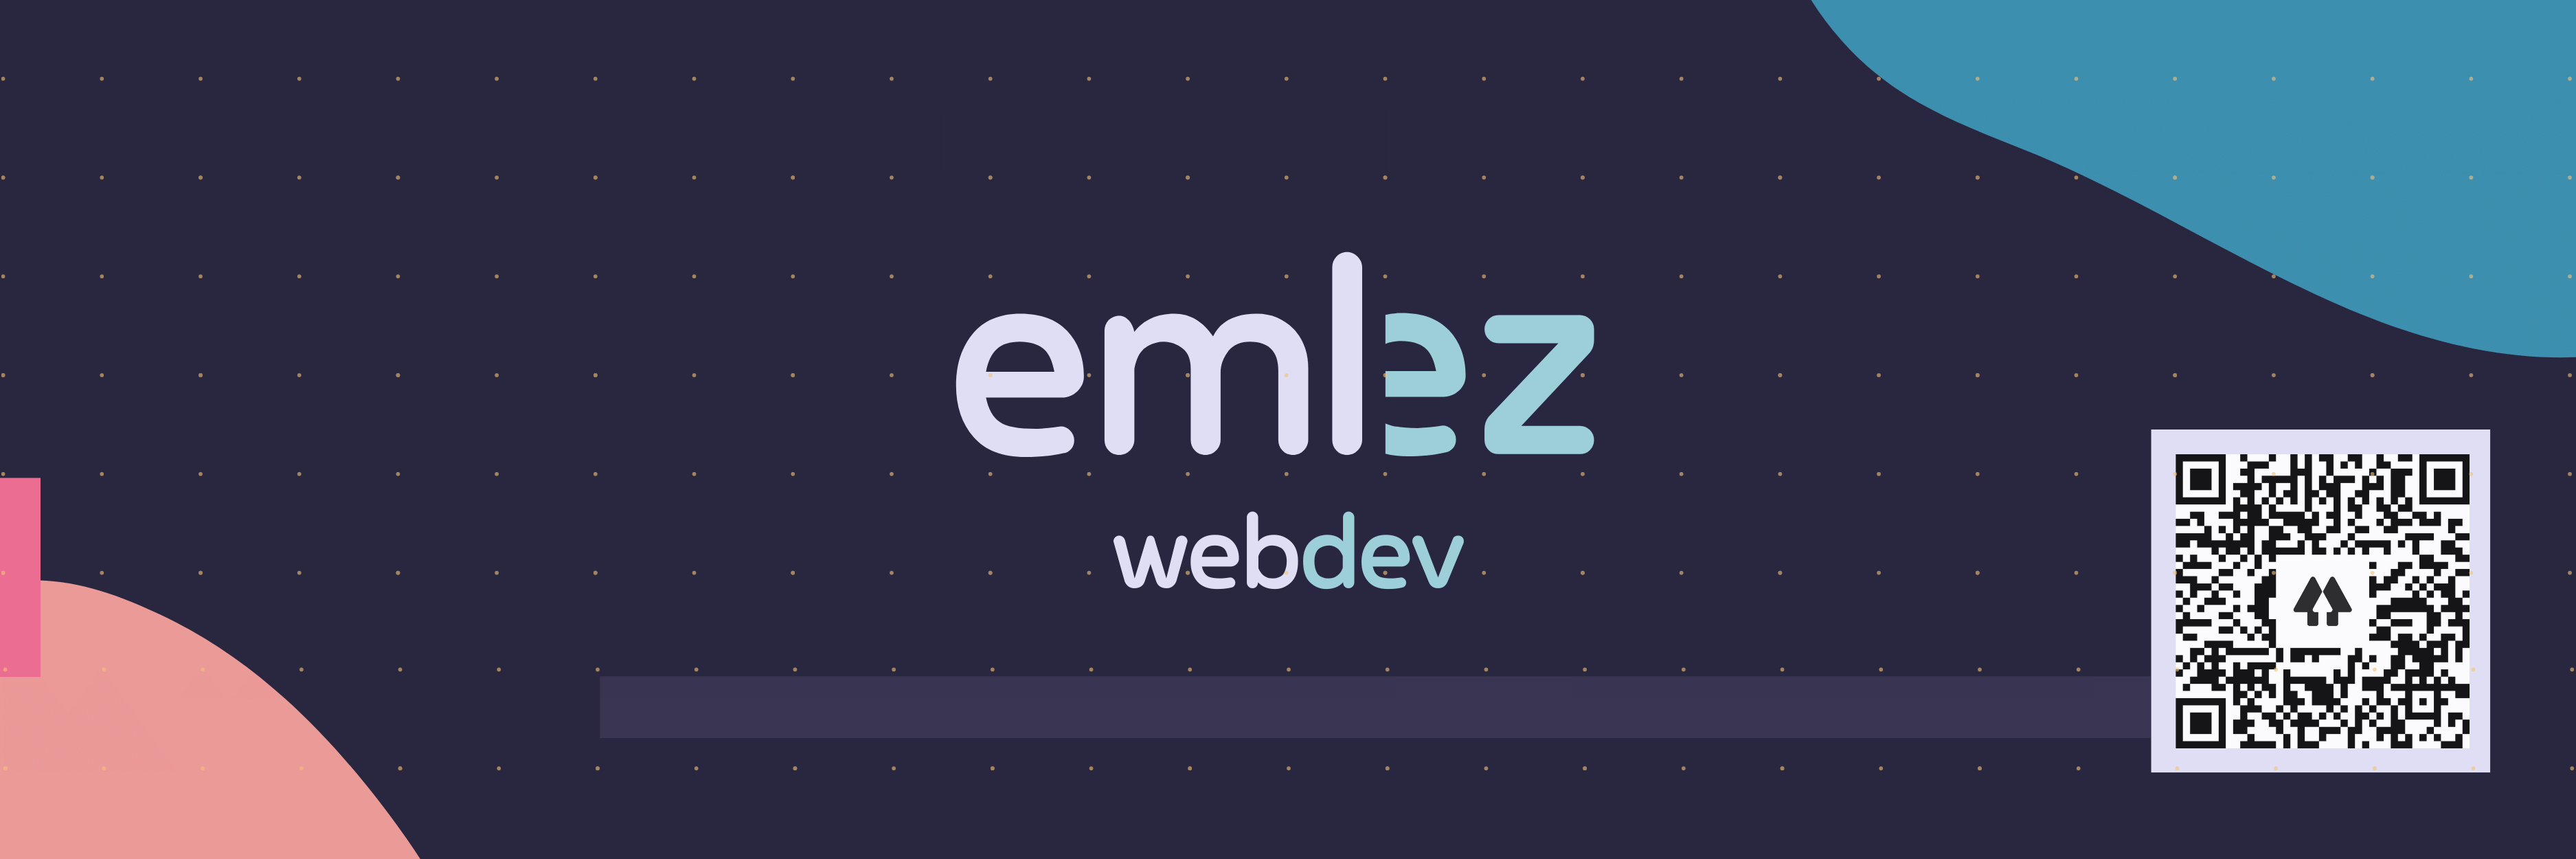 emlez web developer banner with QR code